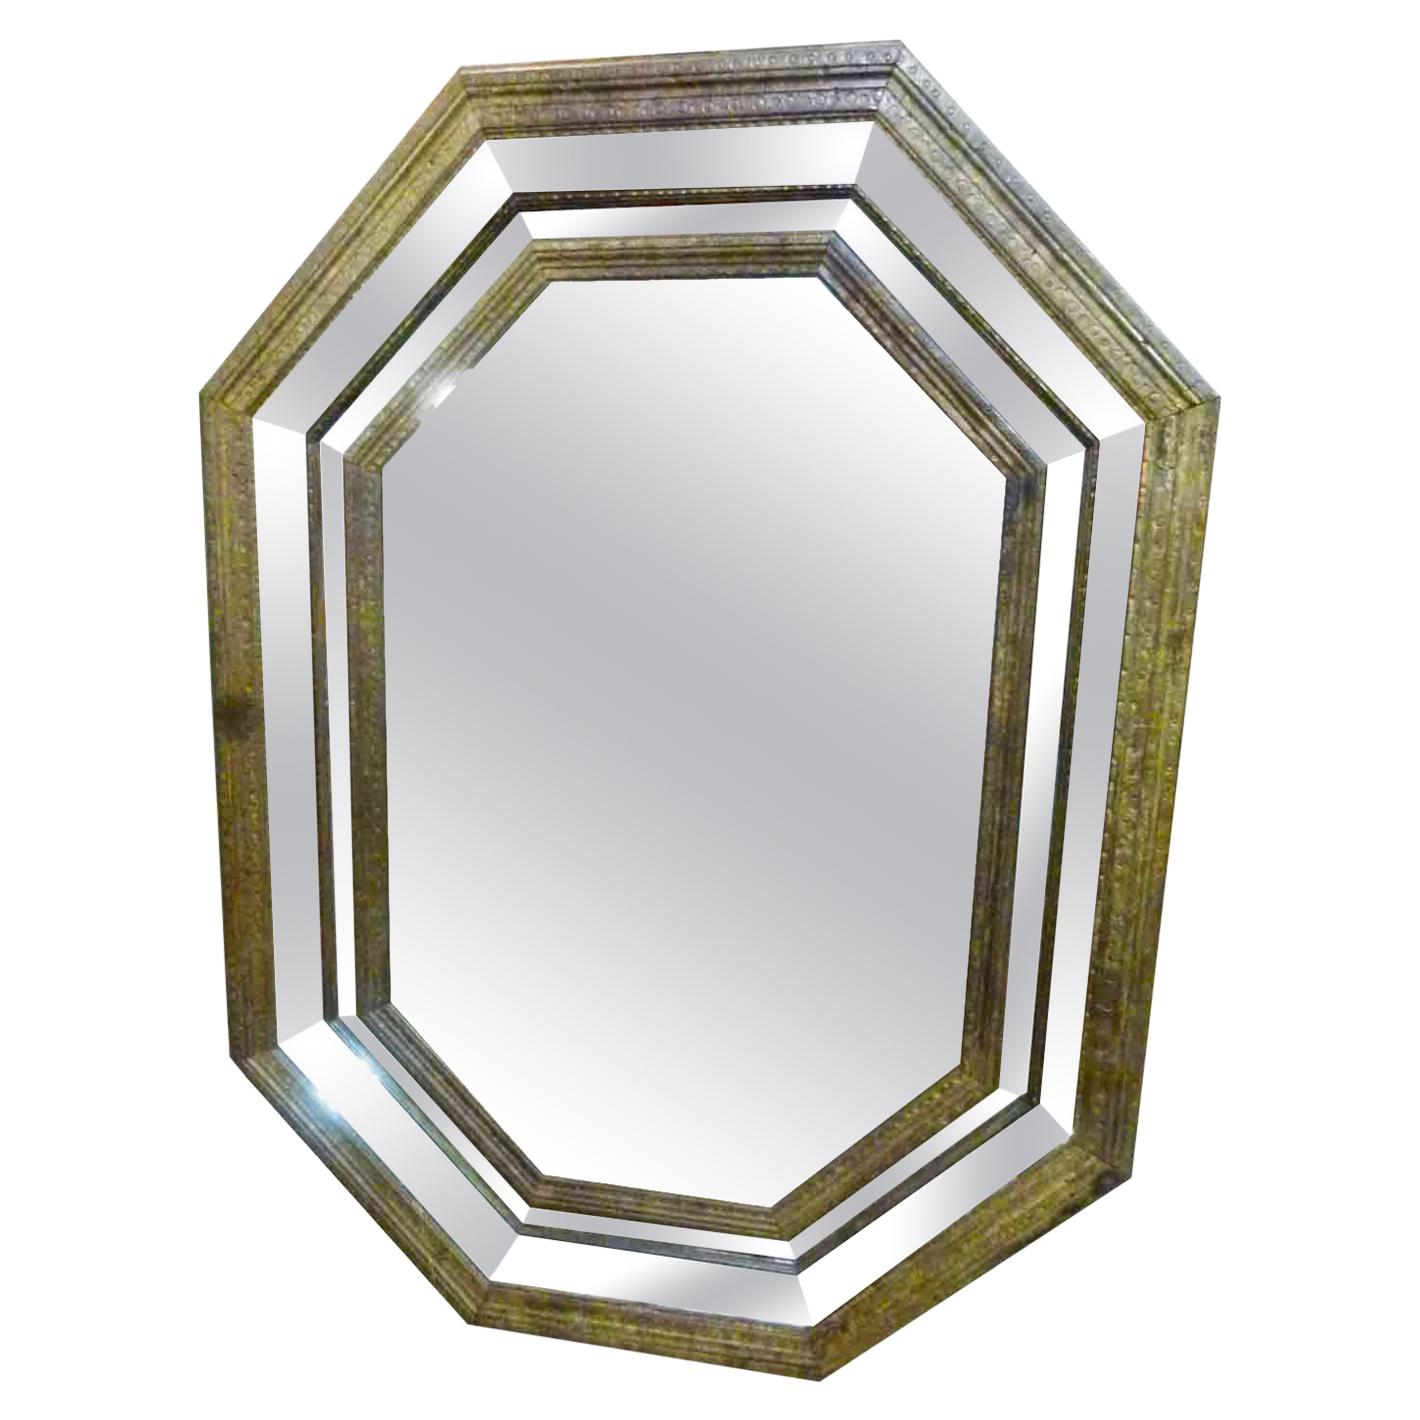 20th Century Iron Double Framed Wall Mirror in Octogonal Shape